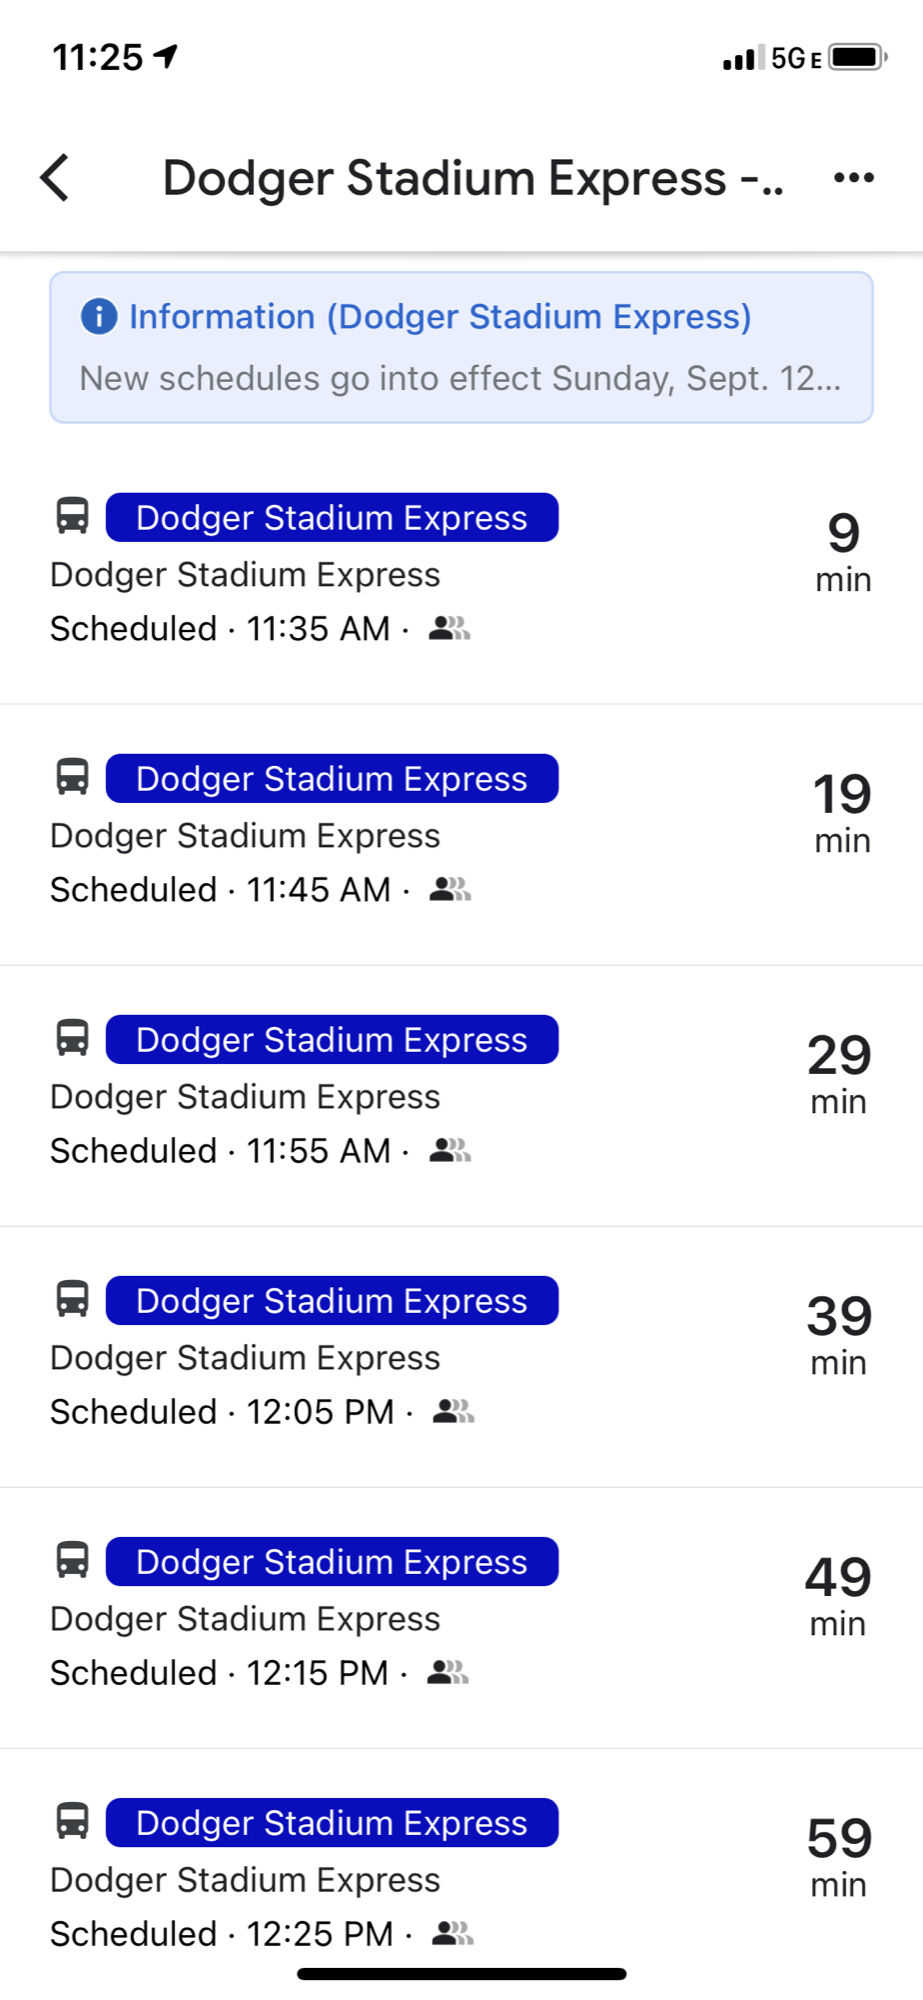 Dodger Stadium Express Route